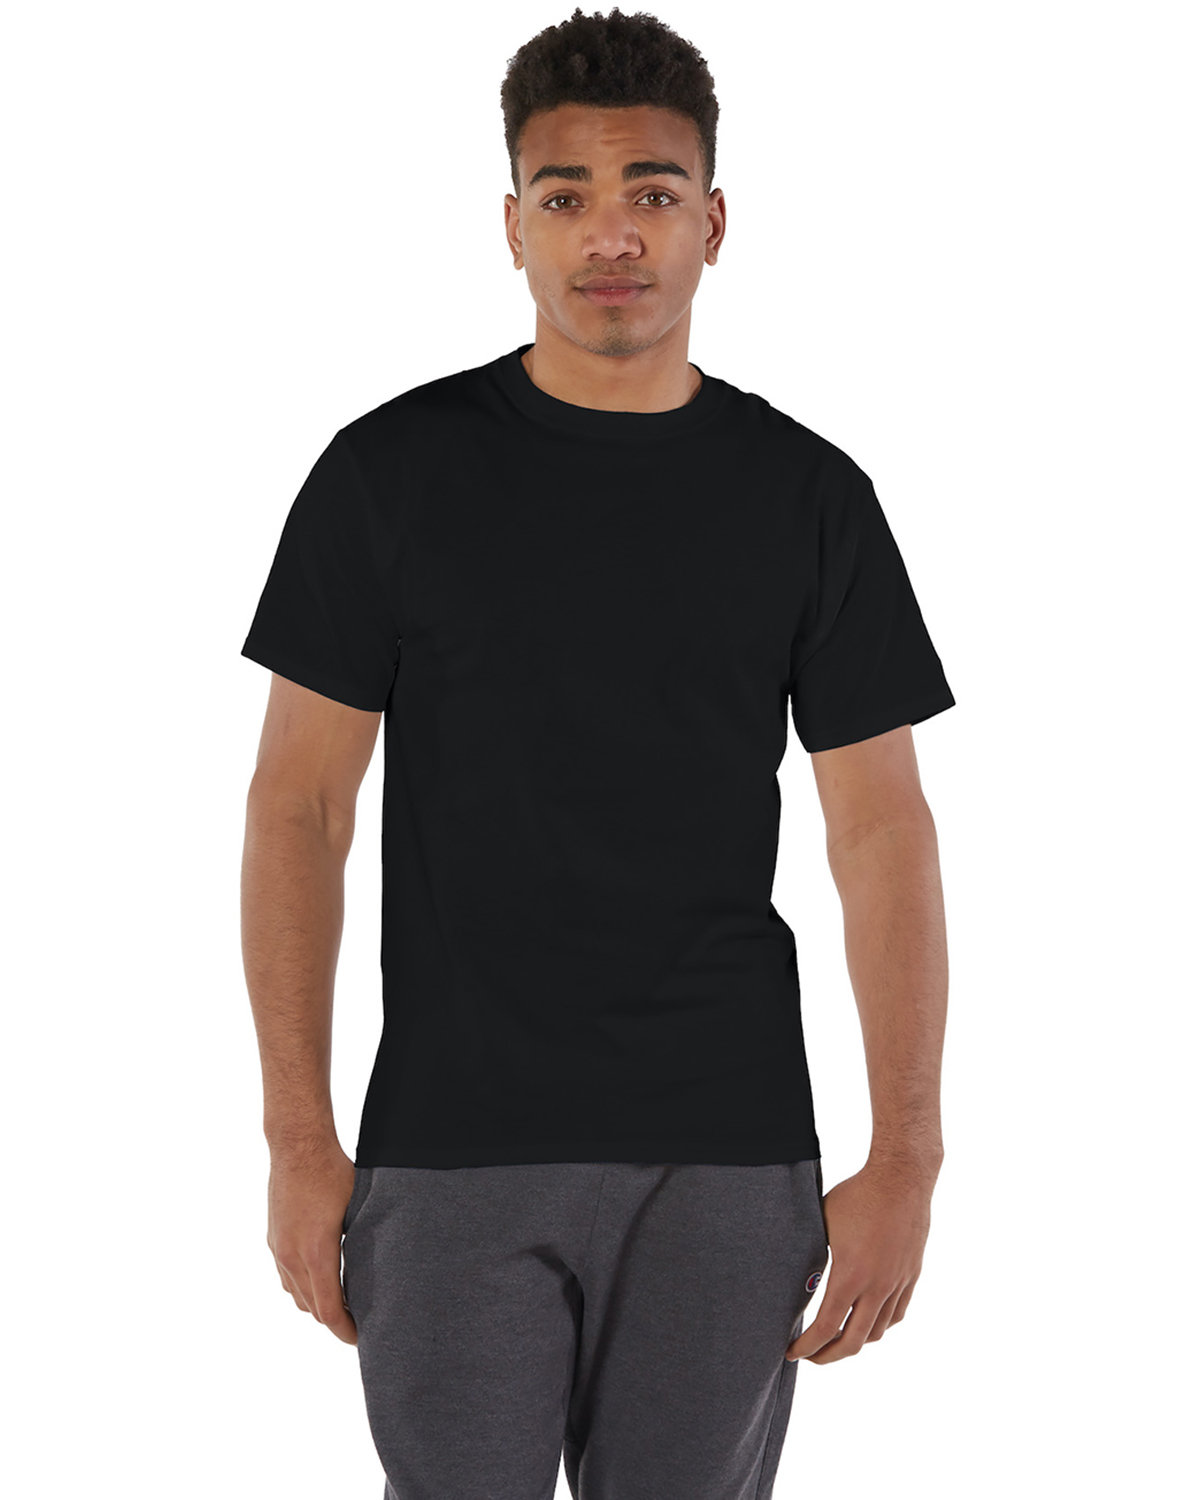 Champion Adult 6 oz. Short-Sleeve T-Shirt BLACK 